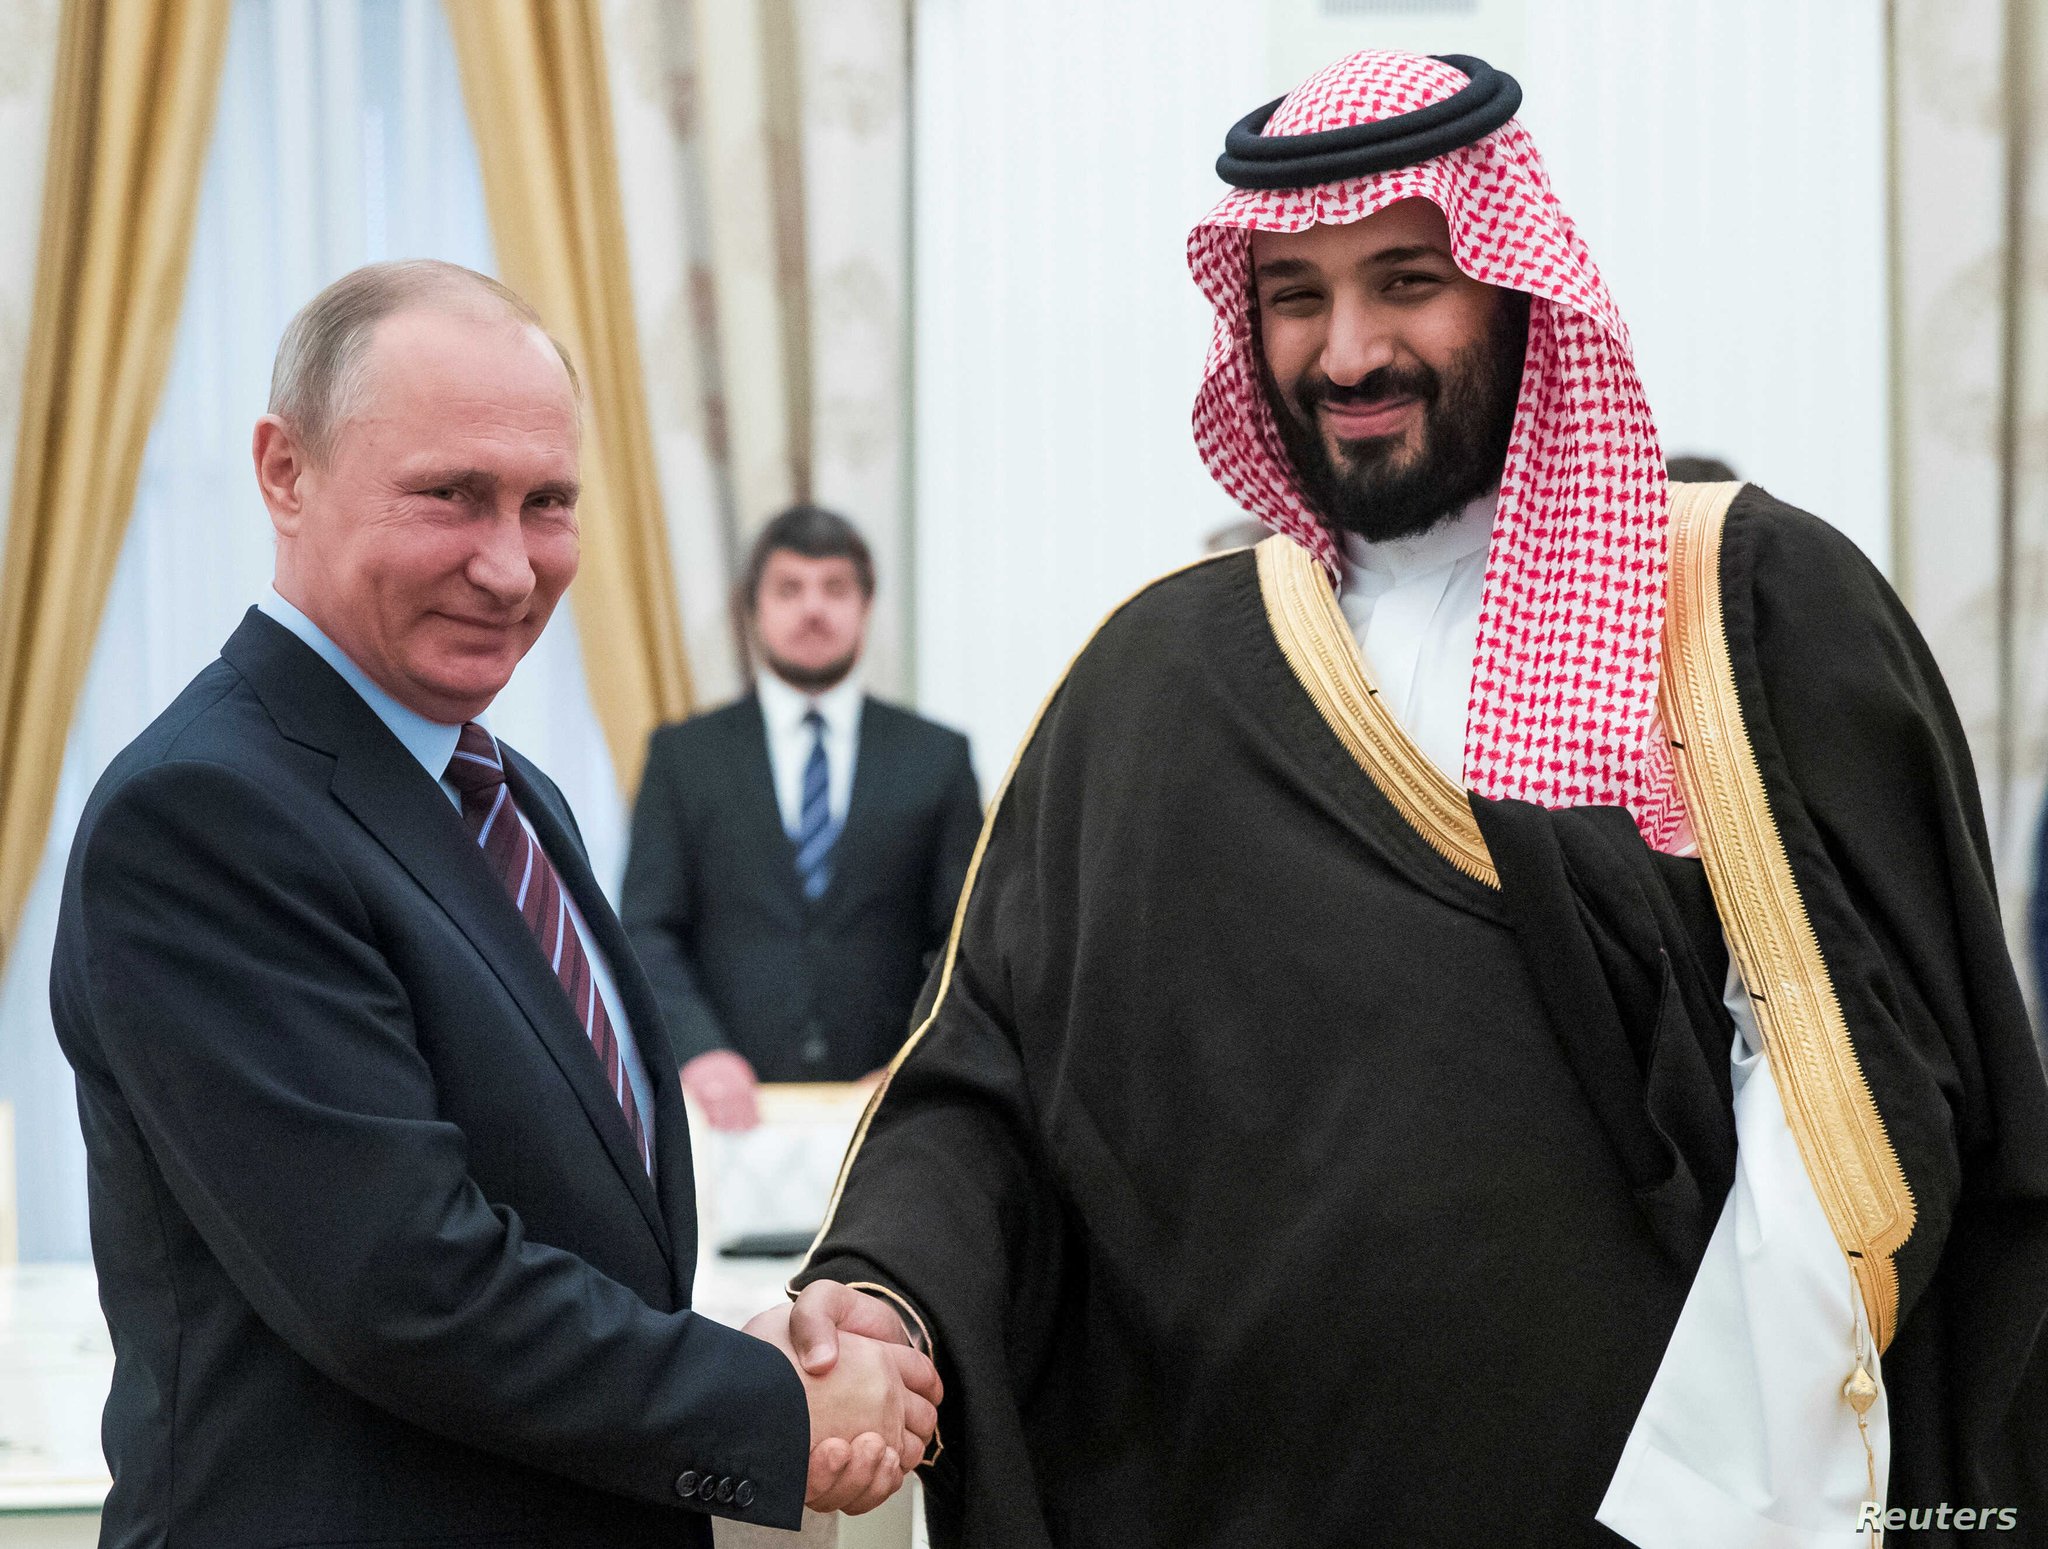 Kremlin's oil concern - why Putin spoke to the Saudi prince